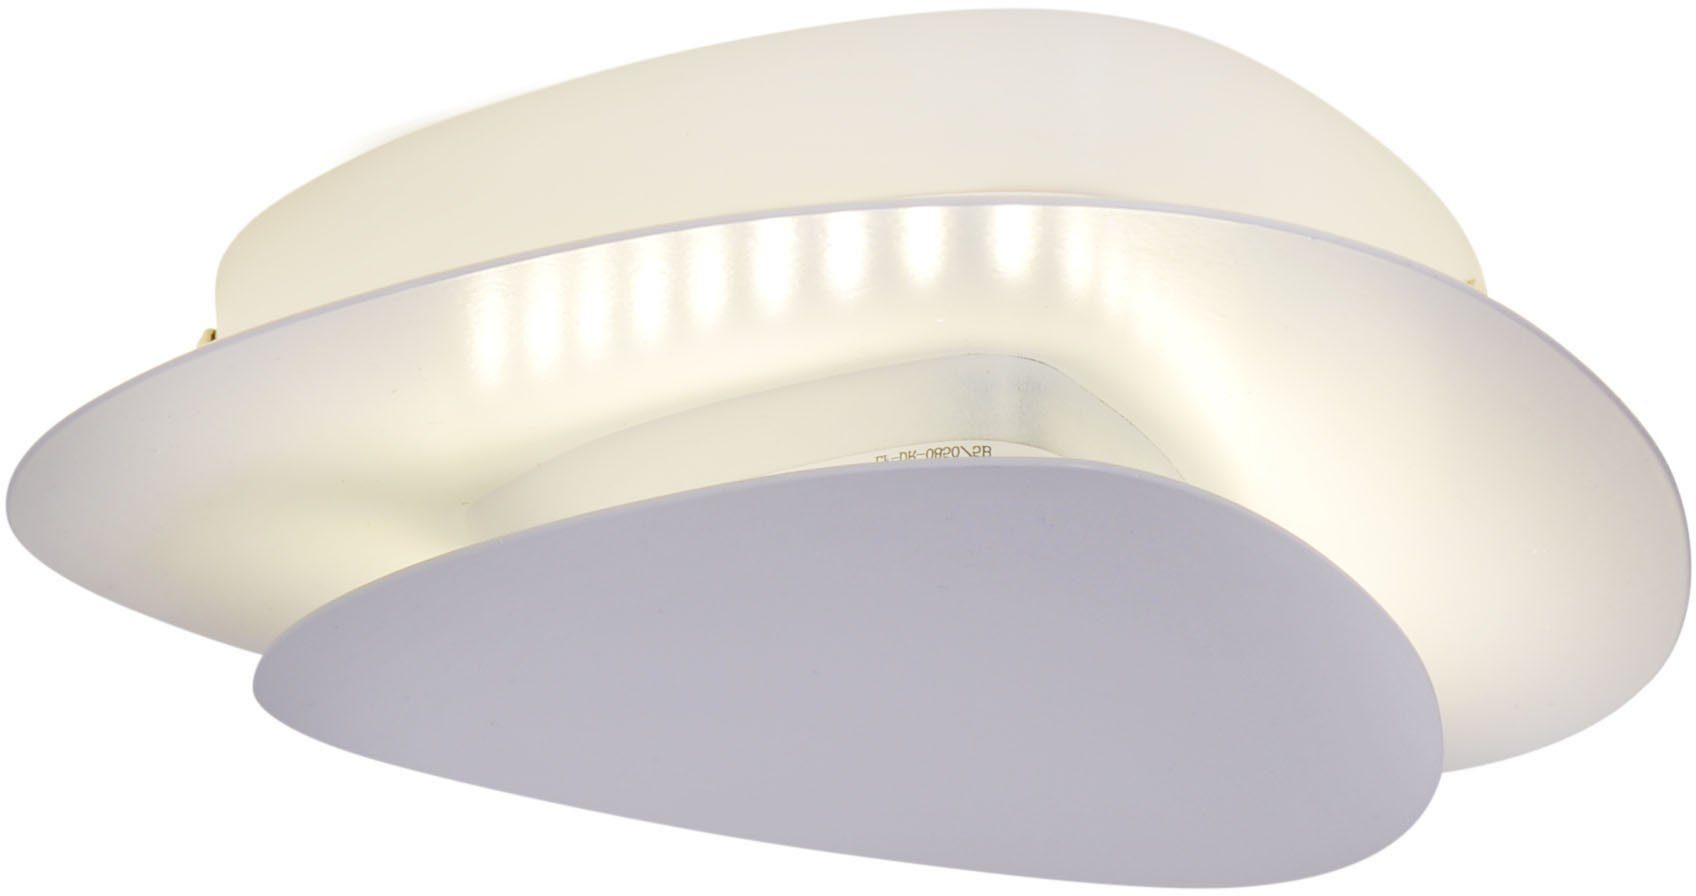 näve LED Deckenleuchte Liso, LED fest integriert, Warmweiß, incl. Treiber, Material: Metall, Farbe: weiß